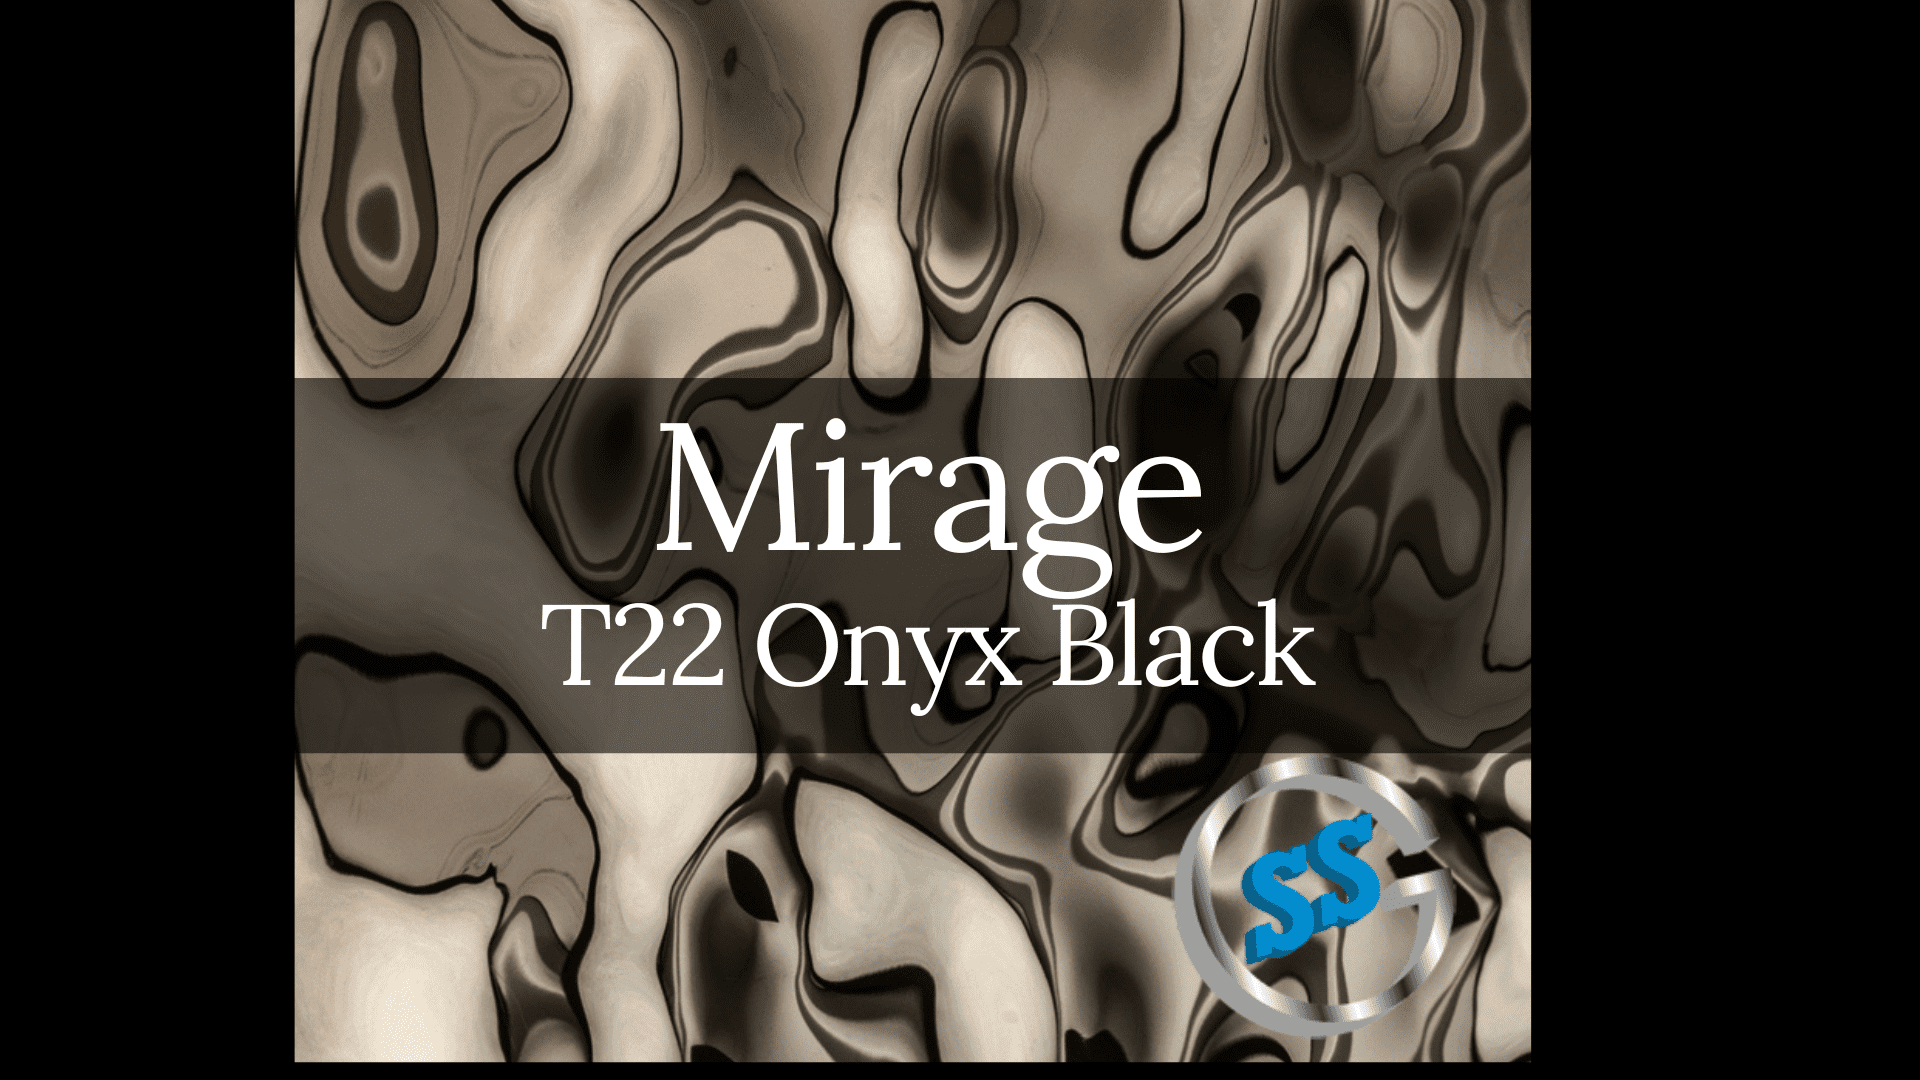 Acciaio inox Water Rhythm Mirage BLACK